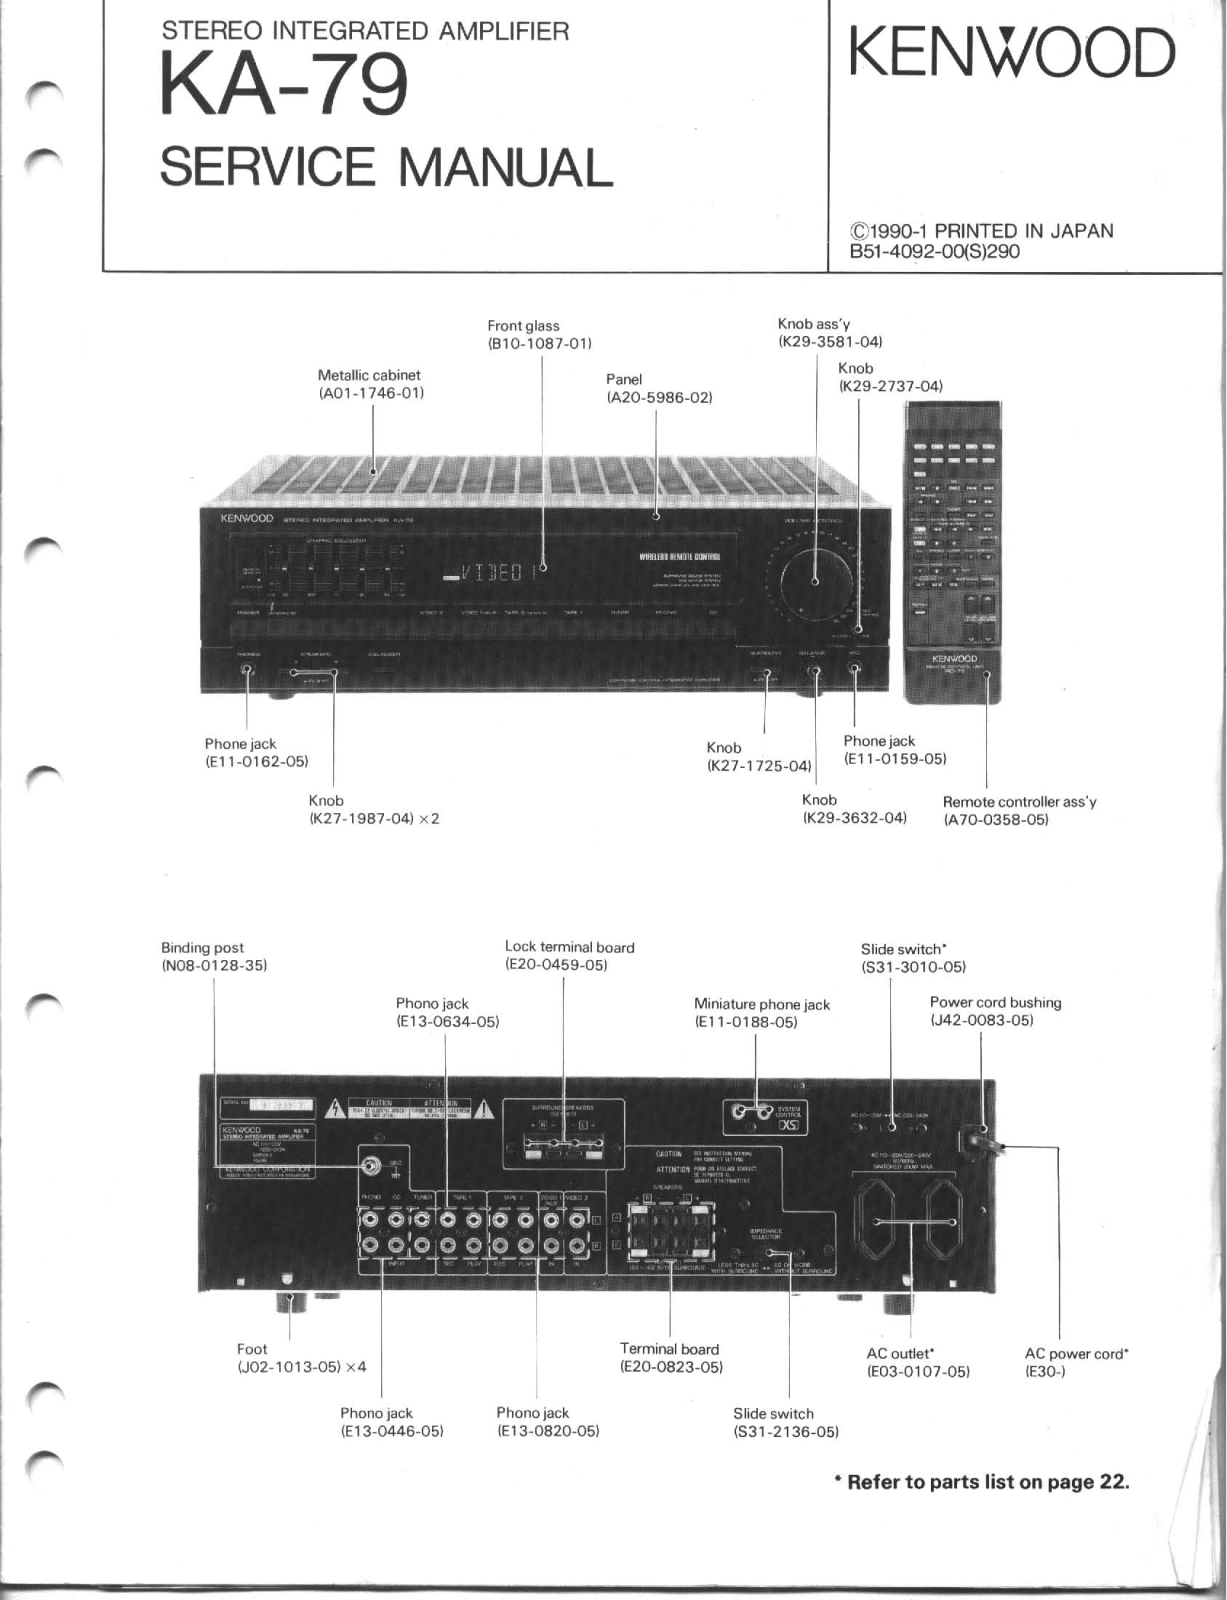 Kenwood KA-79 Service manual